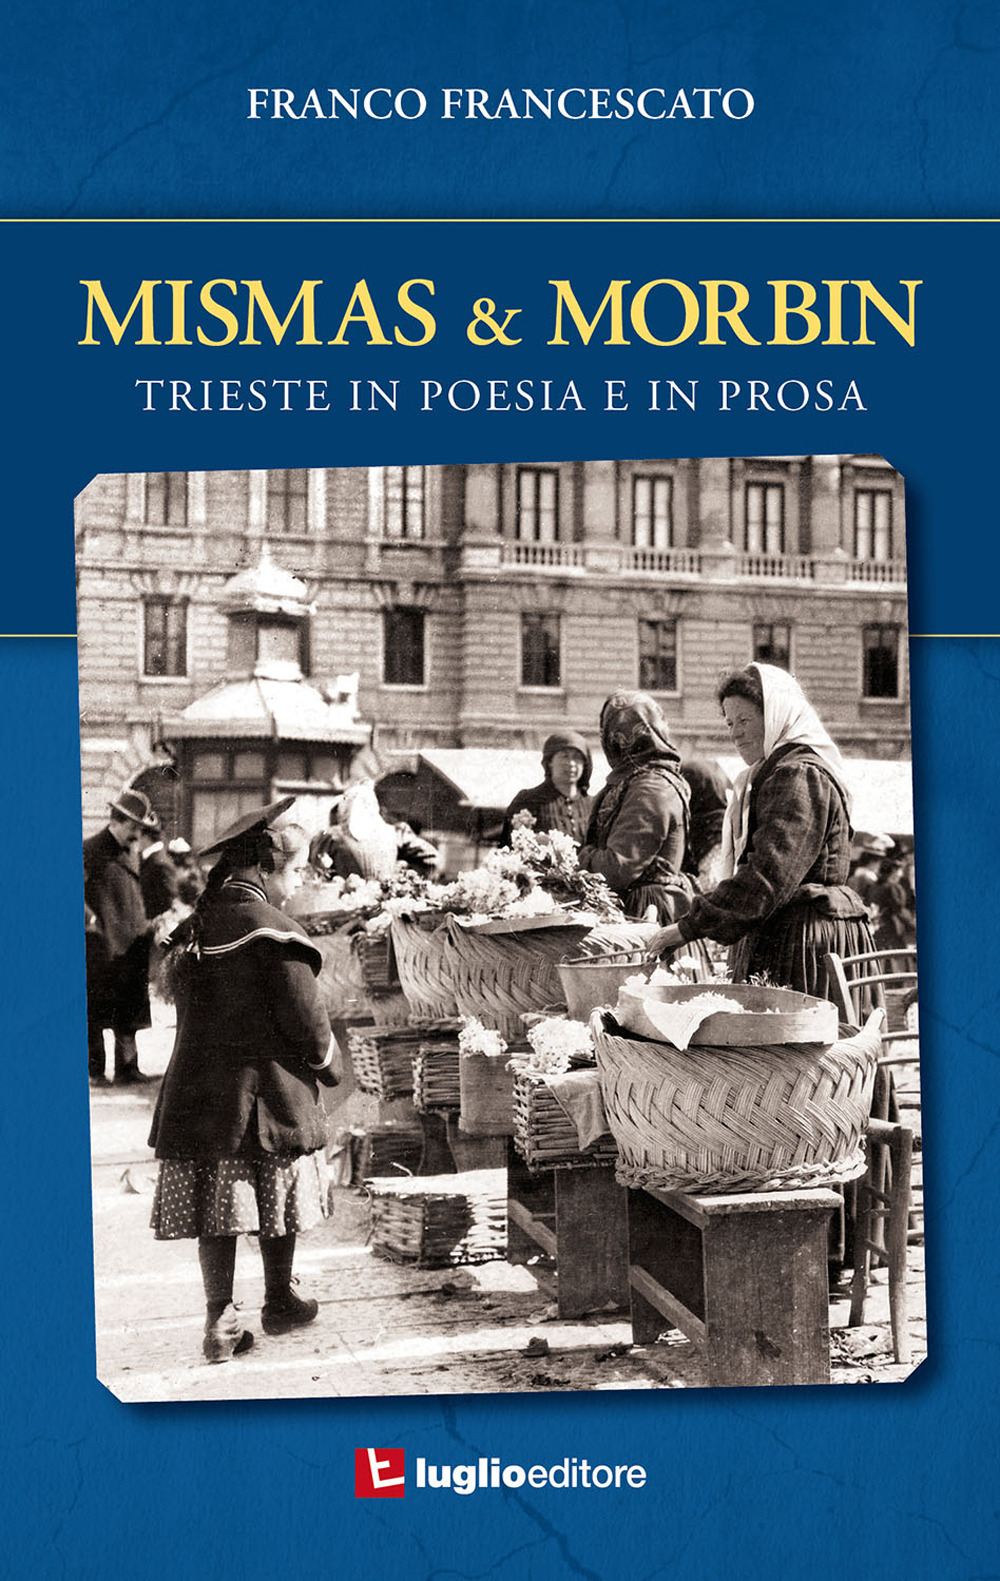 Mismas & Morbin. Trieste in poesia e prosa